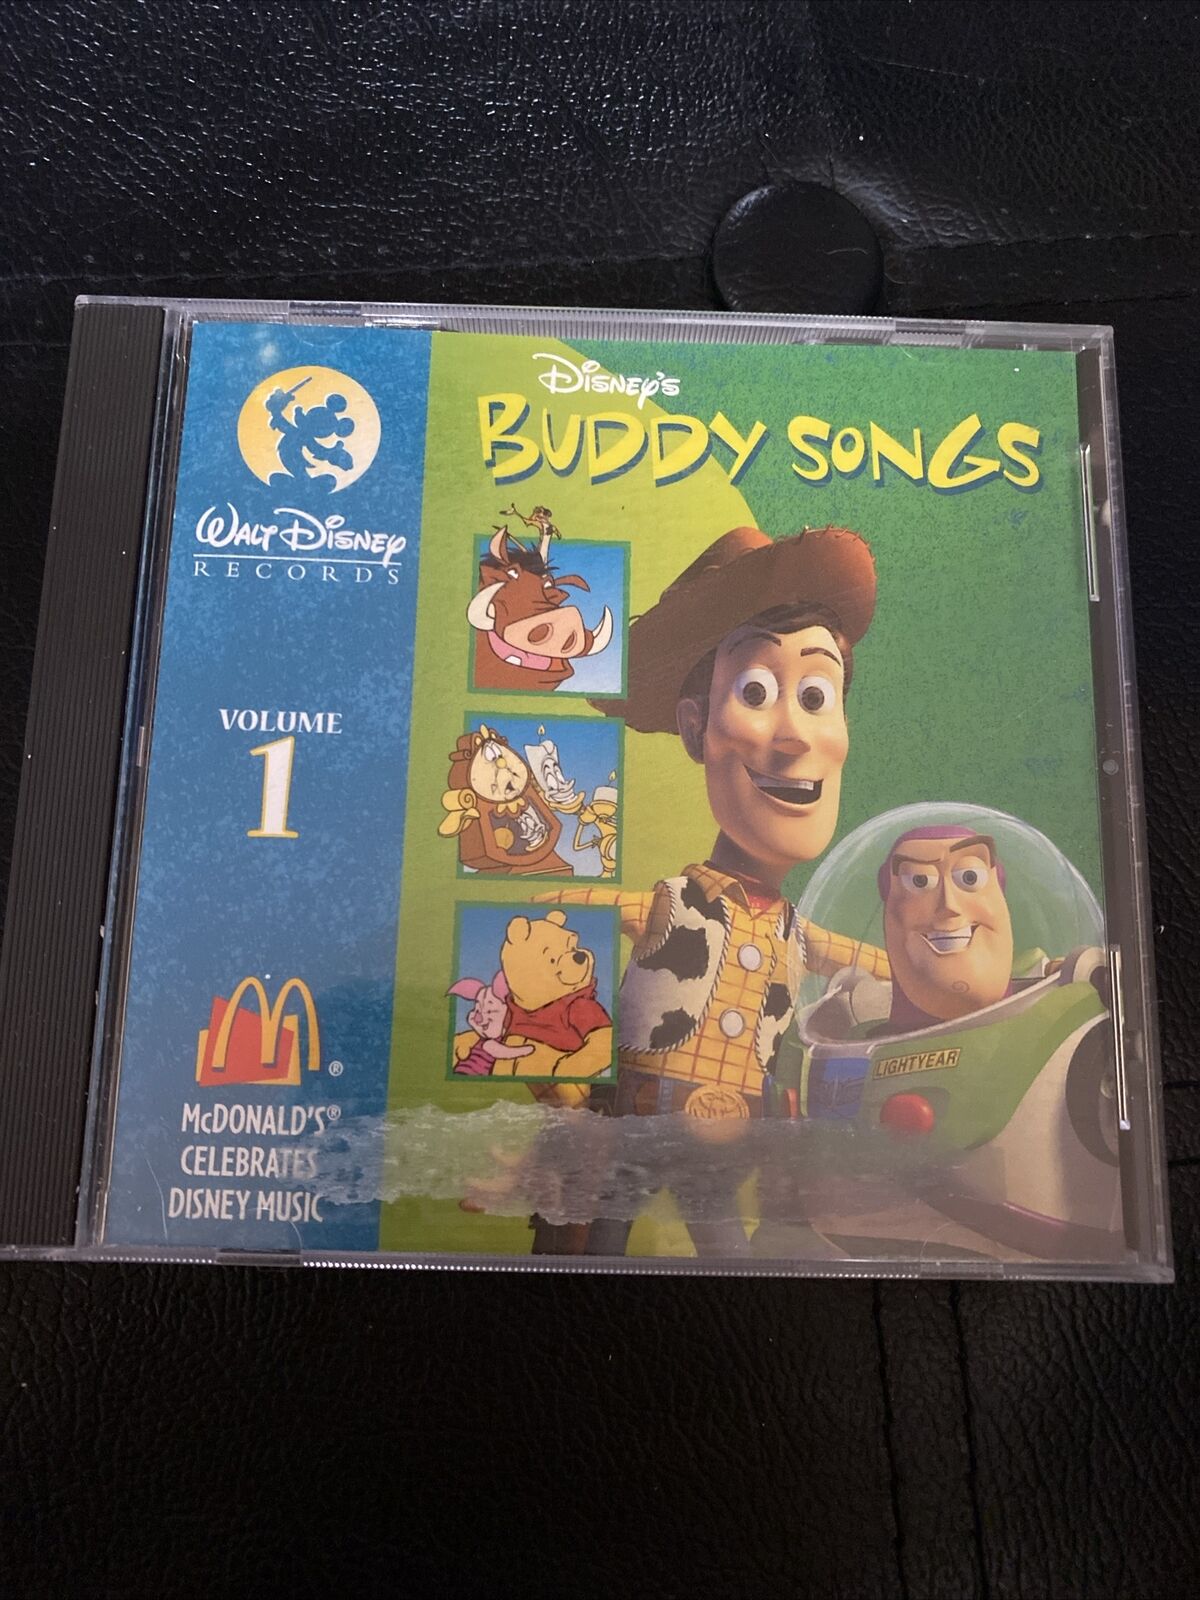 DISNEYS BUDDY SONGS VOLUME 1 Various Artists (CD, 1996, Disney Records)